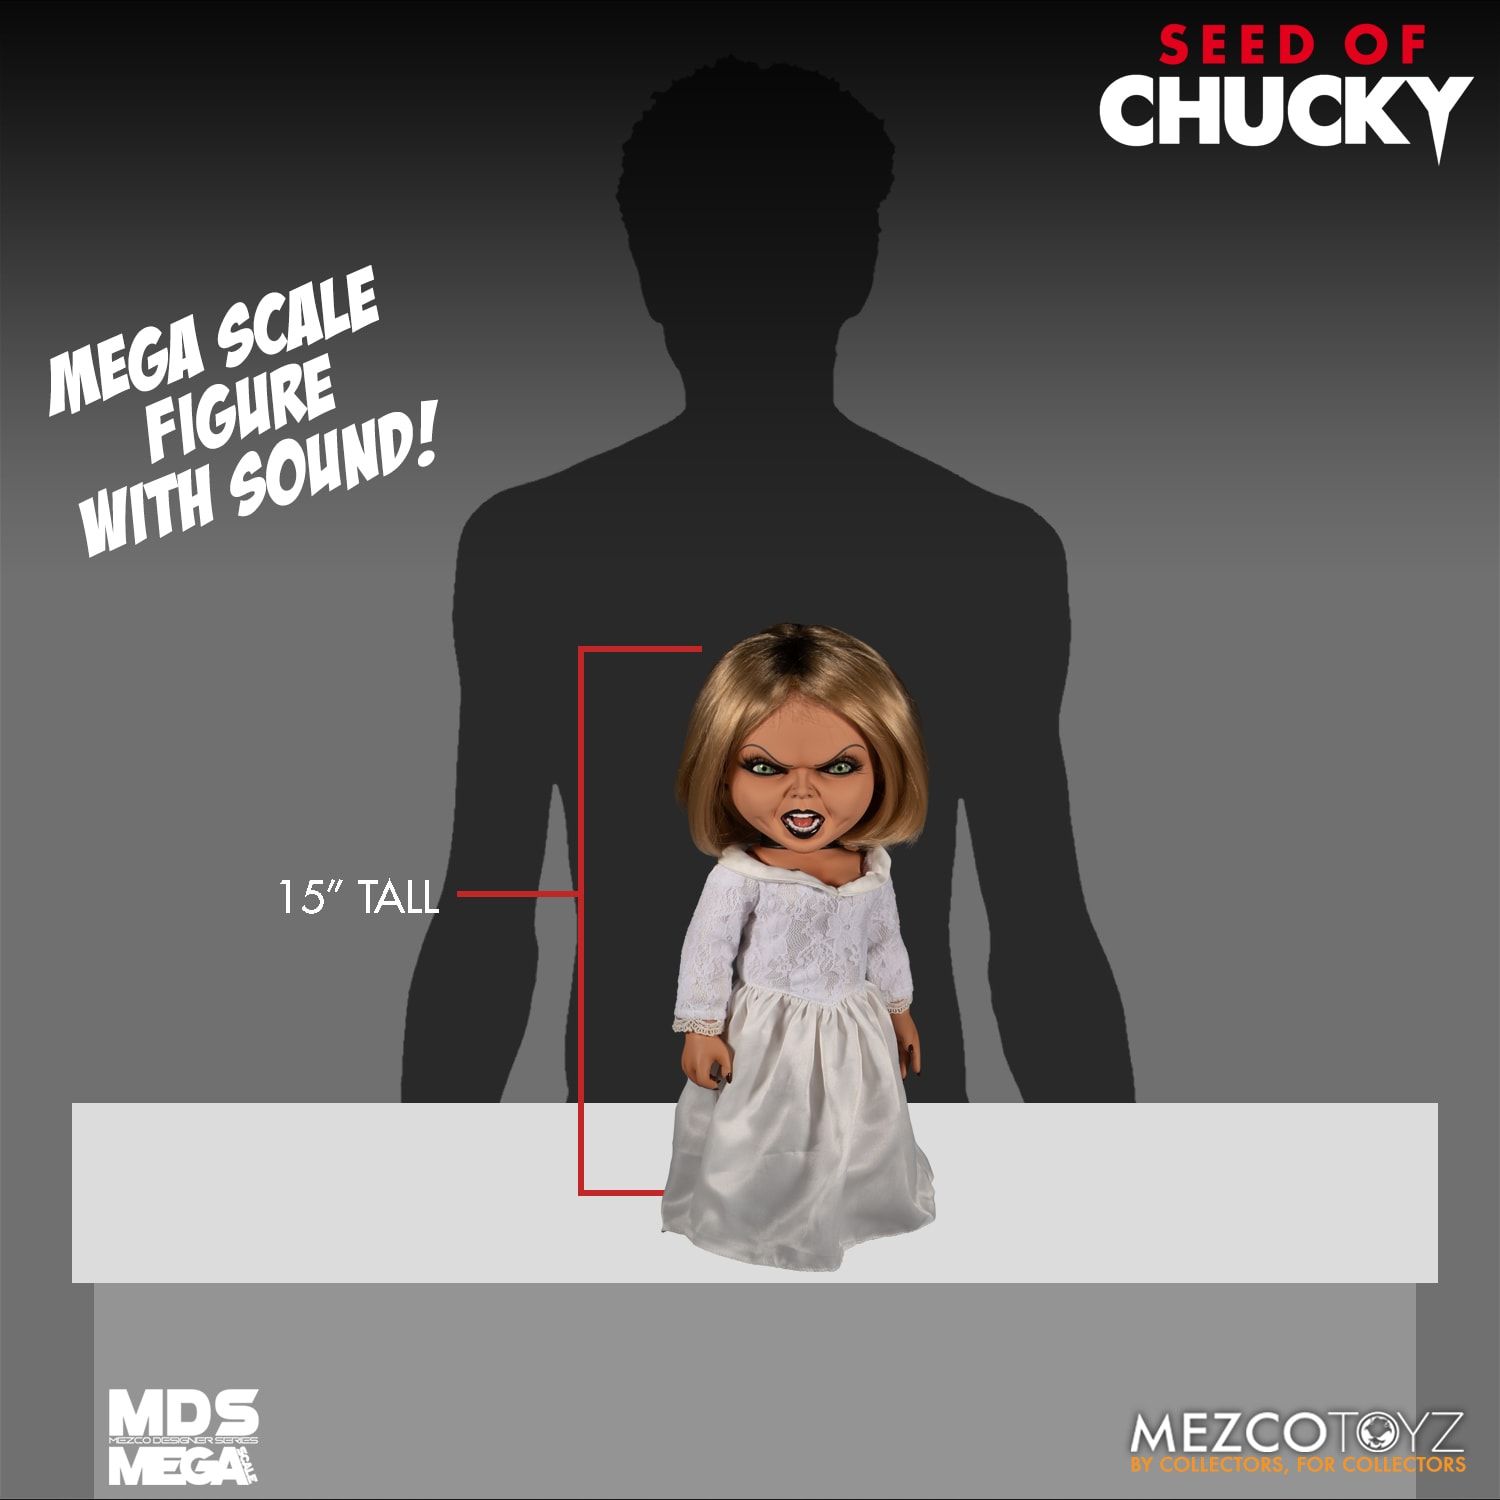 MDS Mega Scale Seed of Chucky: Talking Tiffany